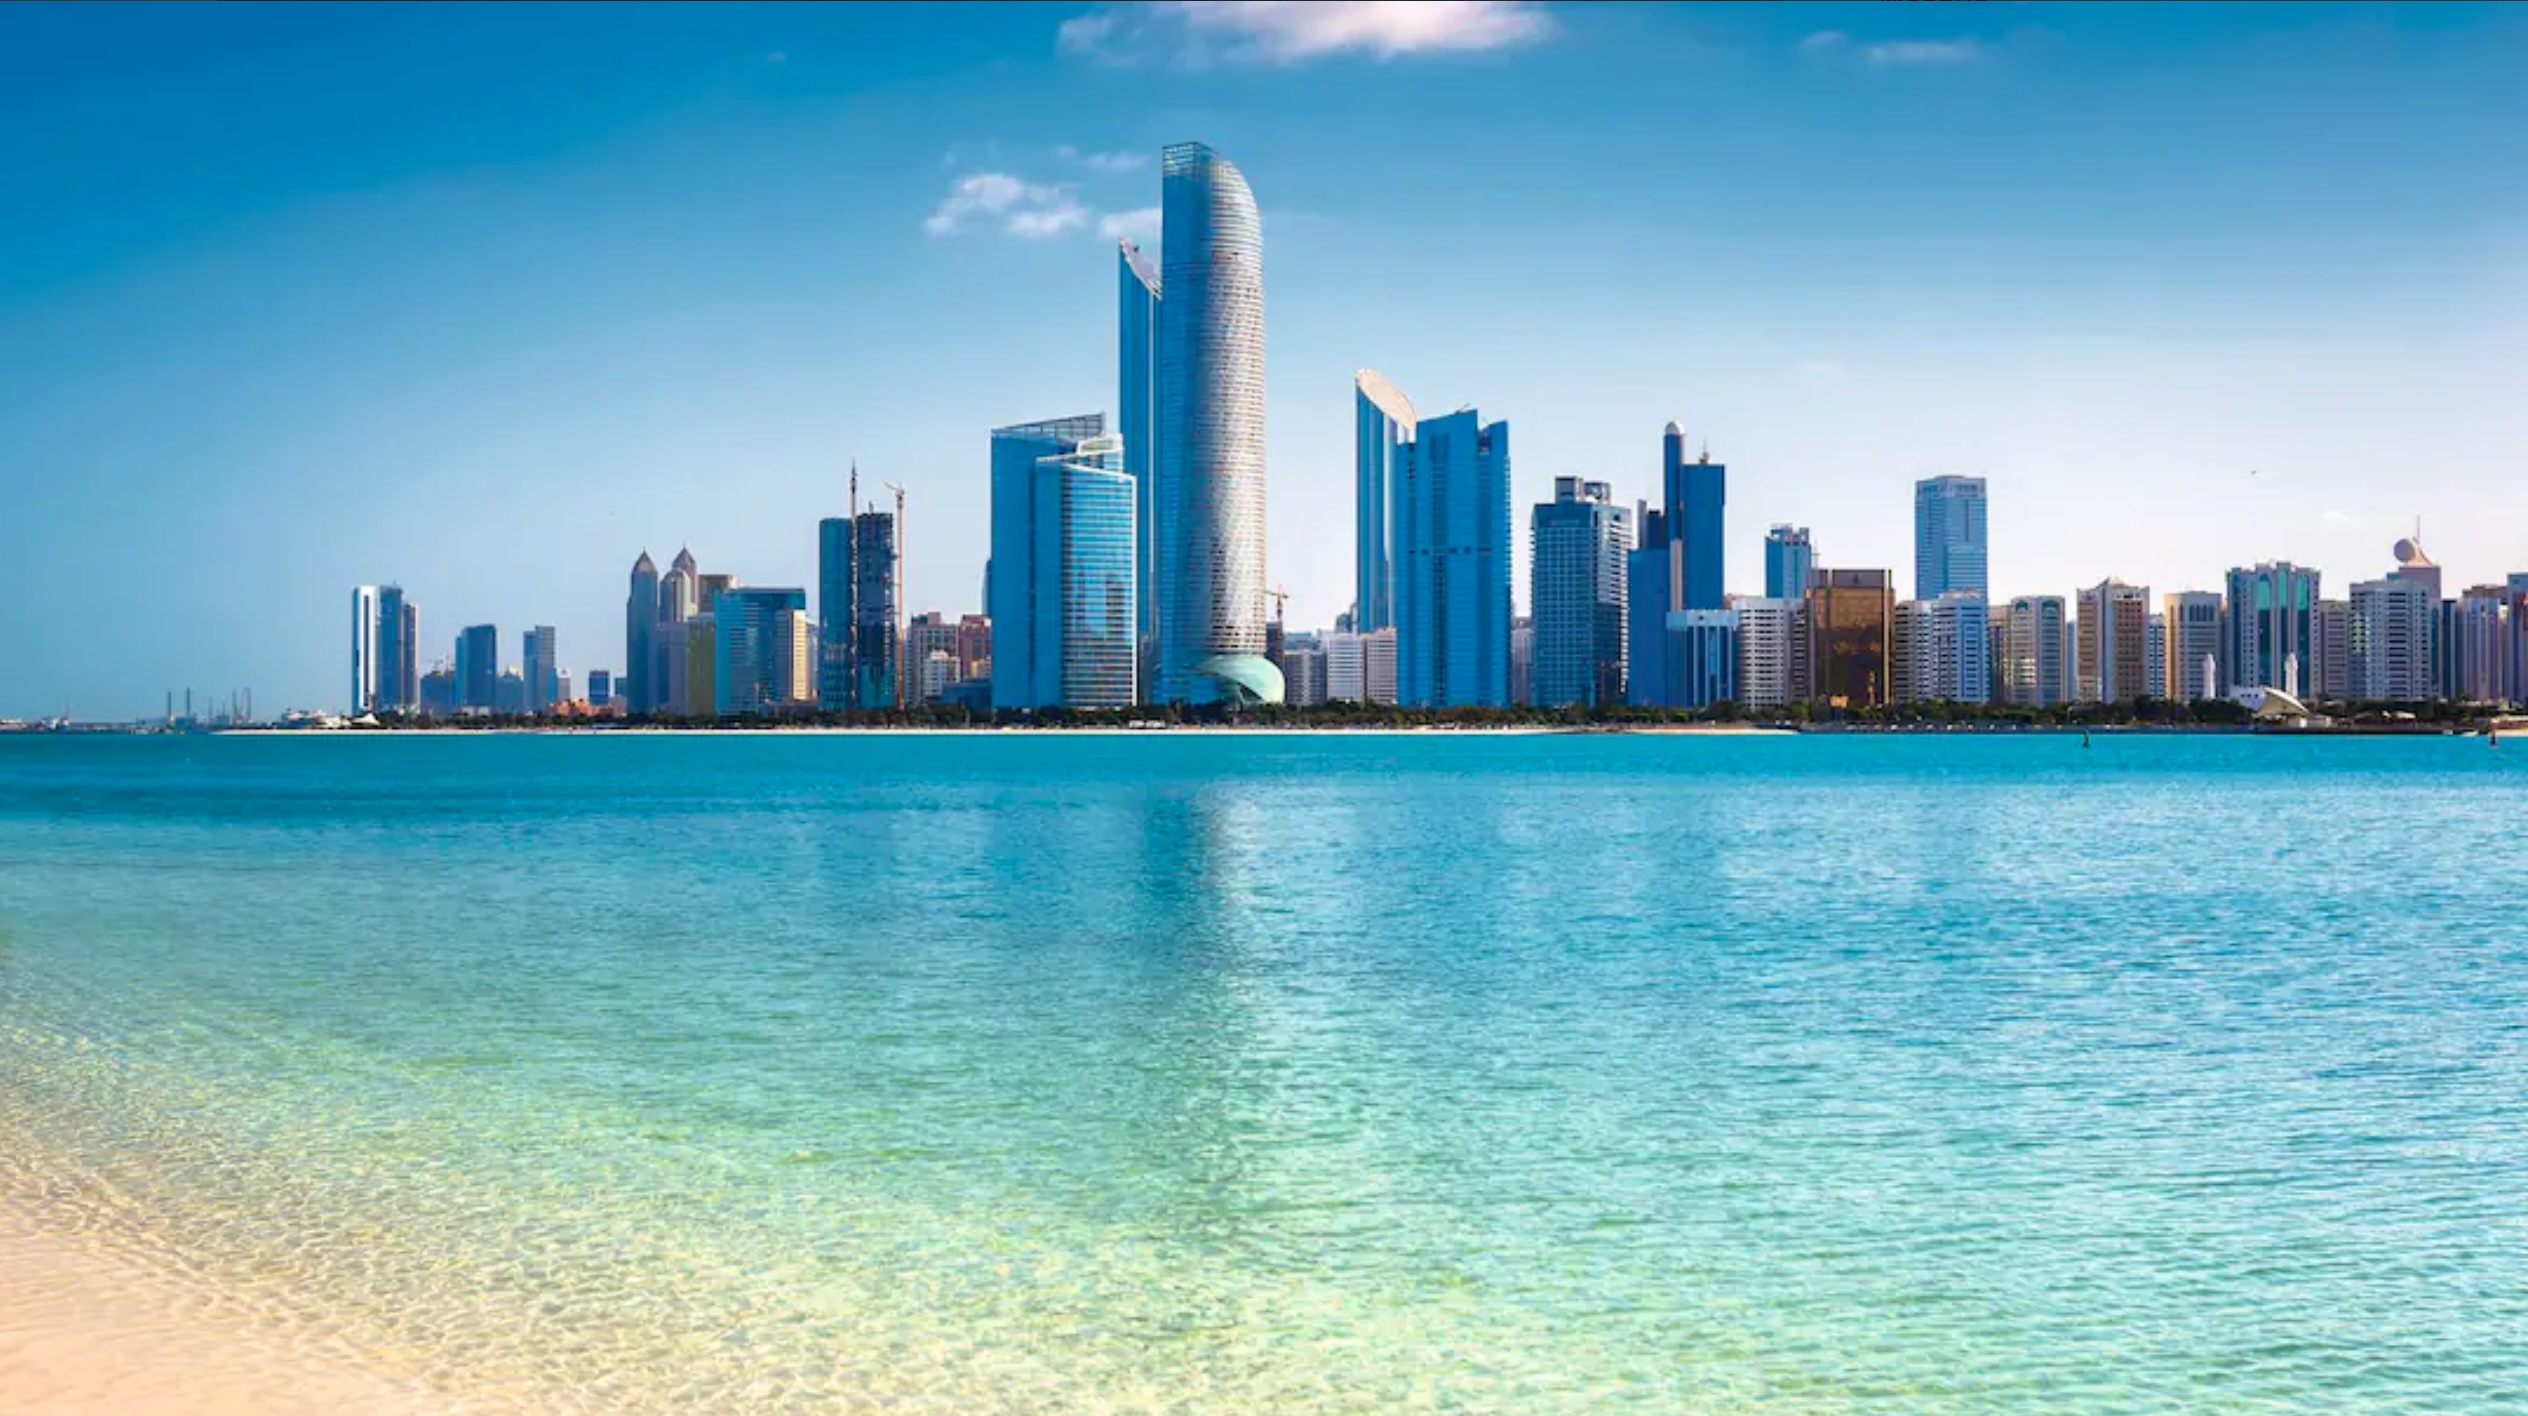 Abu Dhabi Cityscape from across the sea